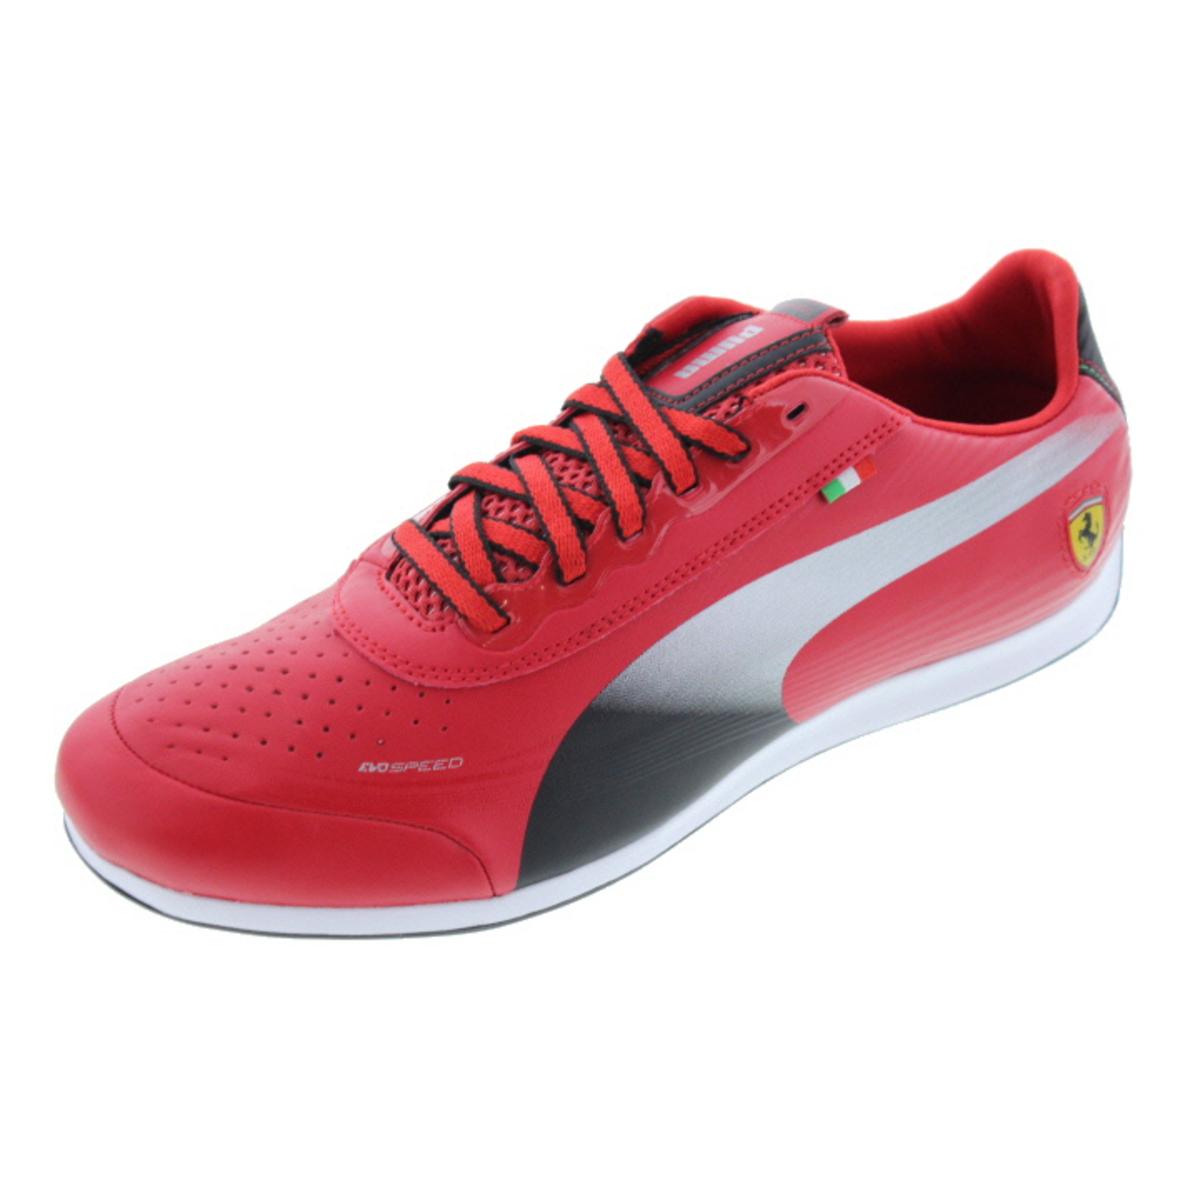 Puma 6153 Mens evoSPEED Low Leather Driving Ferrari Tennis Shoes ...